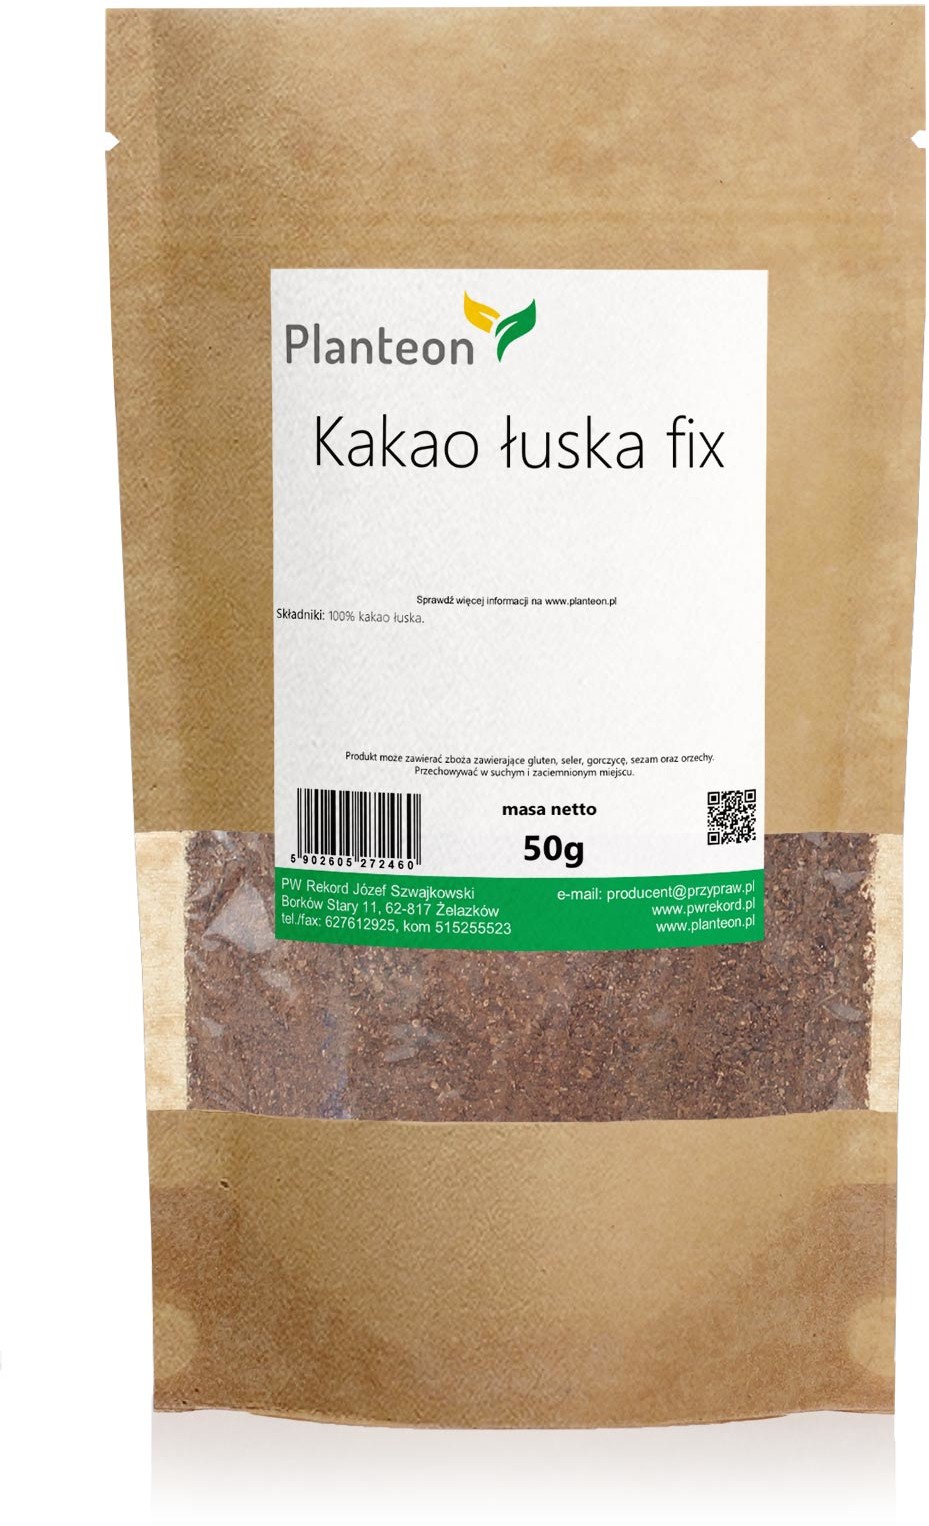 Planteon Kakao łuska fix 50g 2-0077-03-3